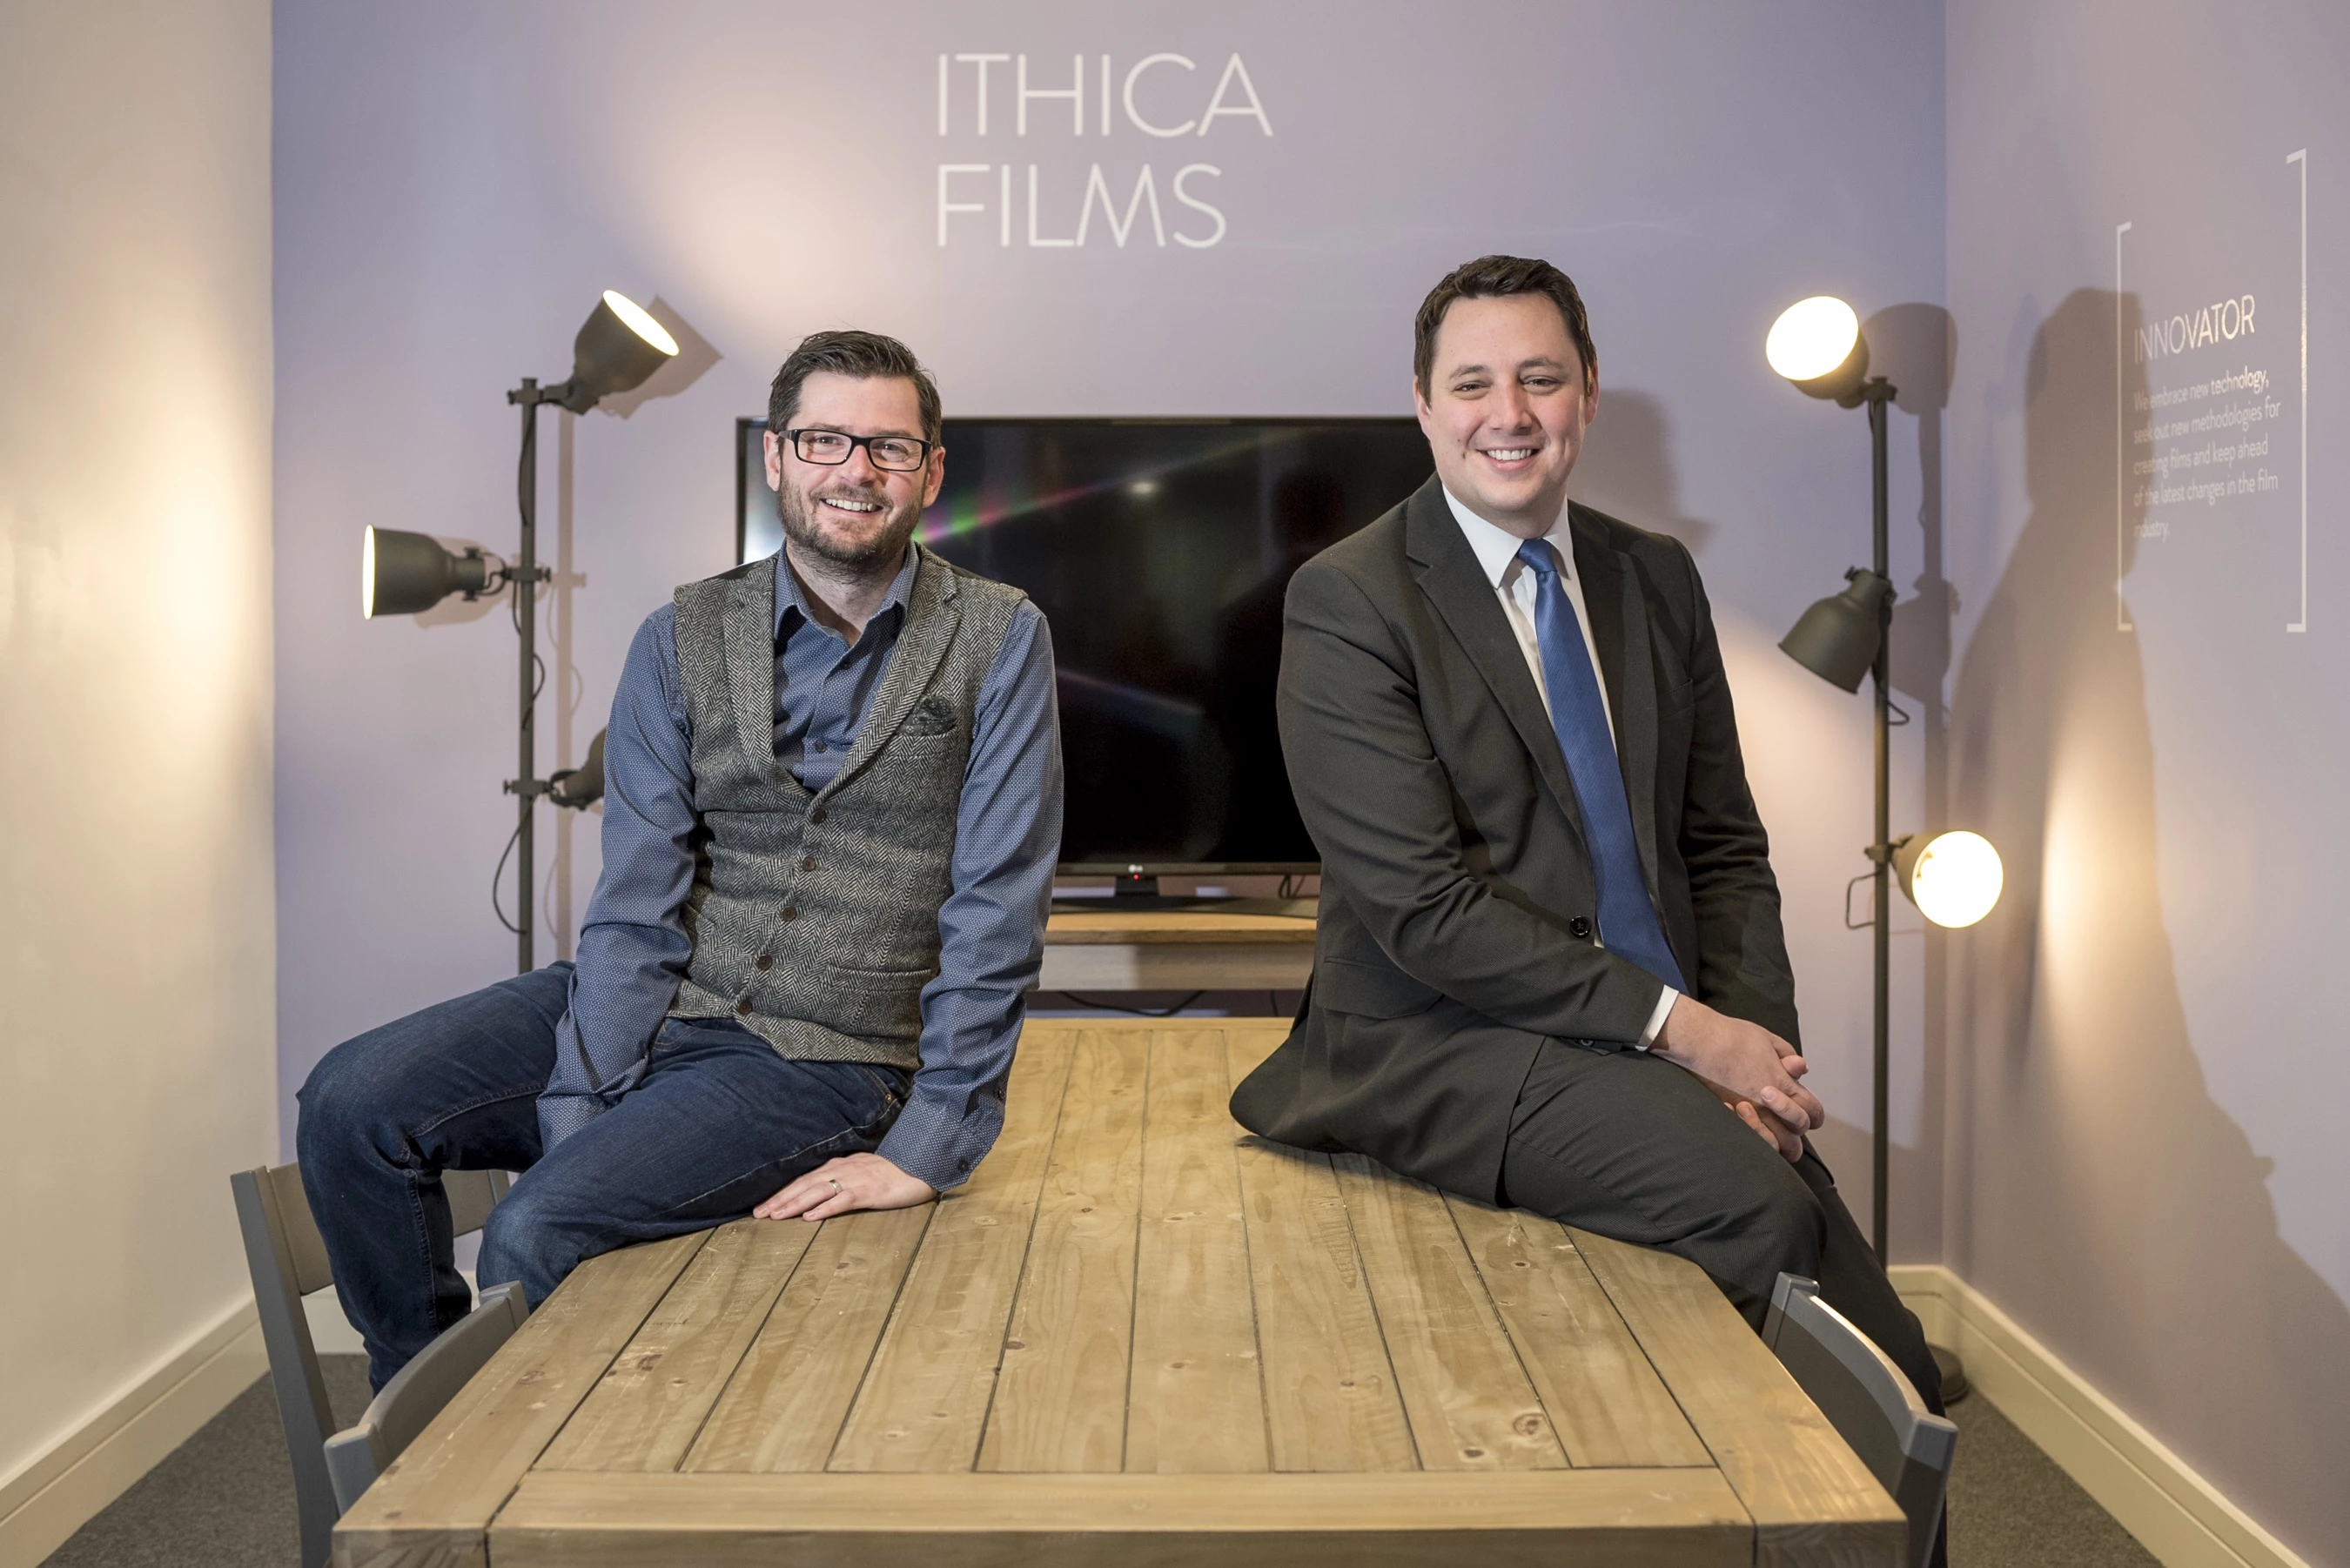 Ithica Films' Matt McGough (left) and Tees Valley Mayor Ben Houchen